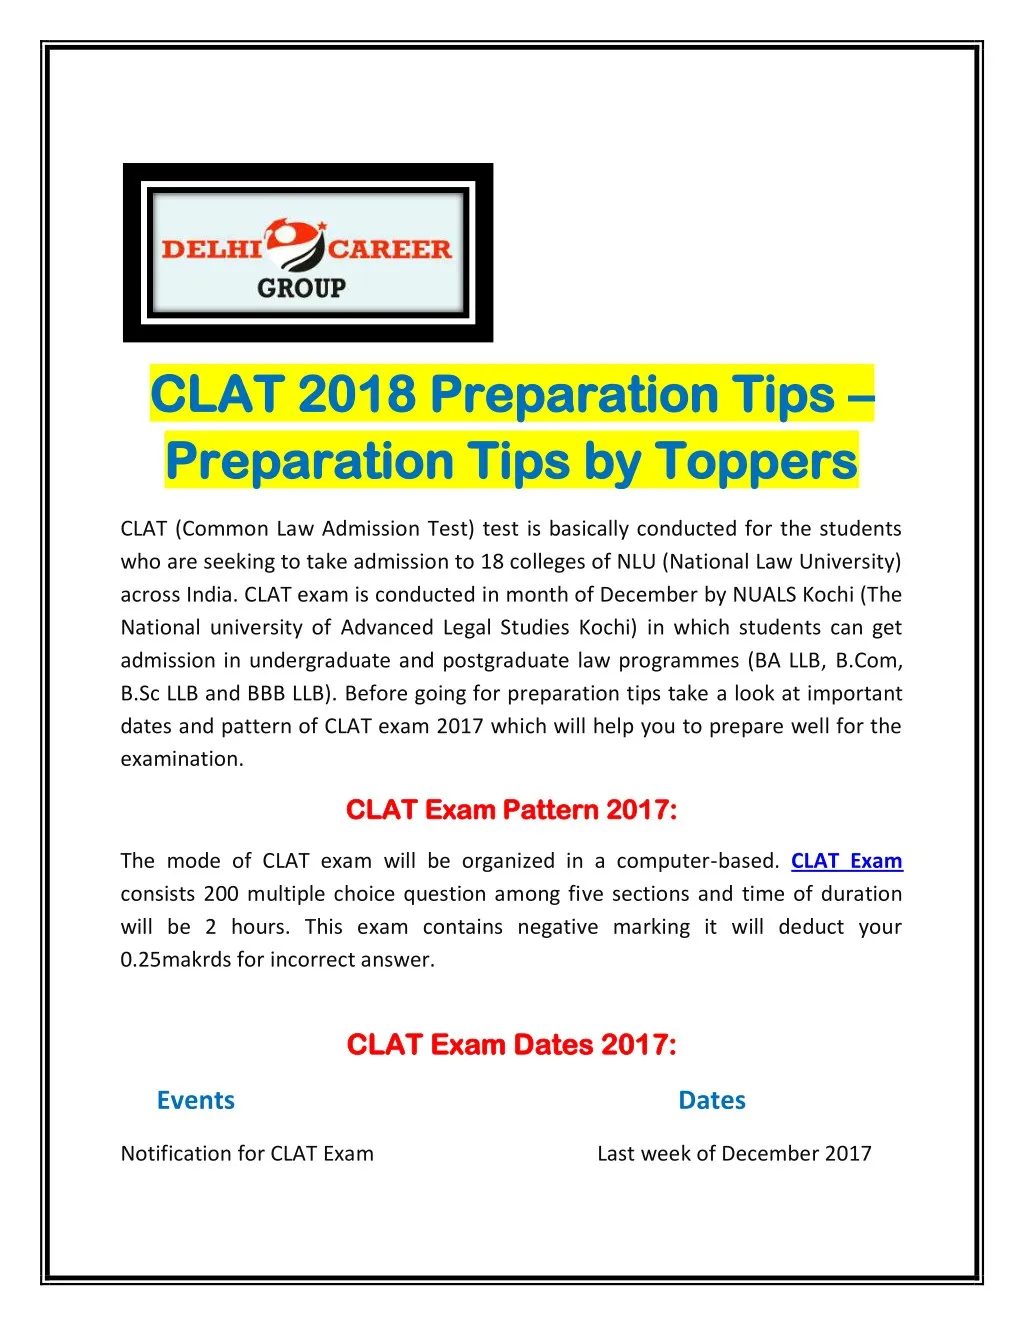 clat 2018 preparation tips clat 2018 preparation